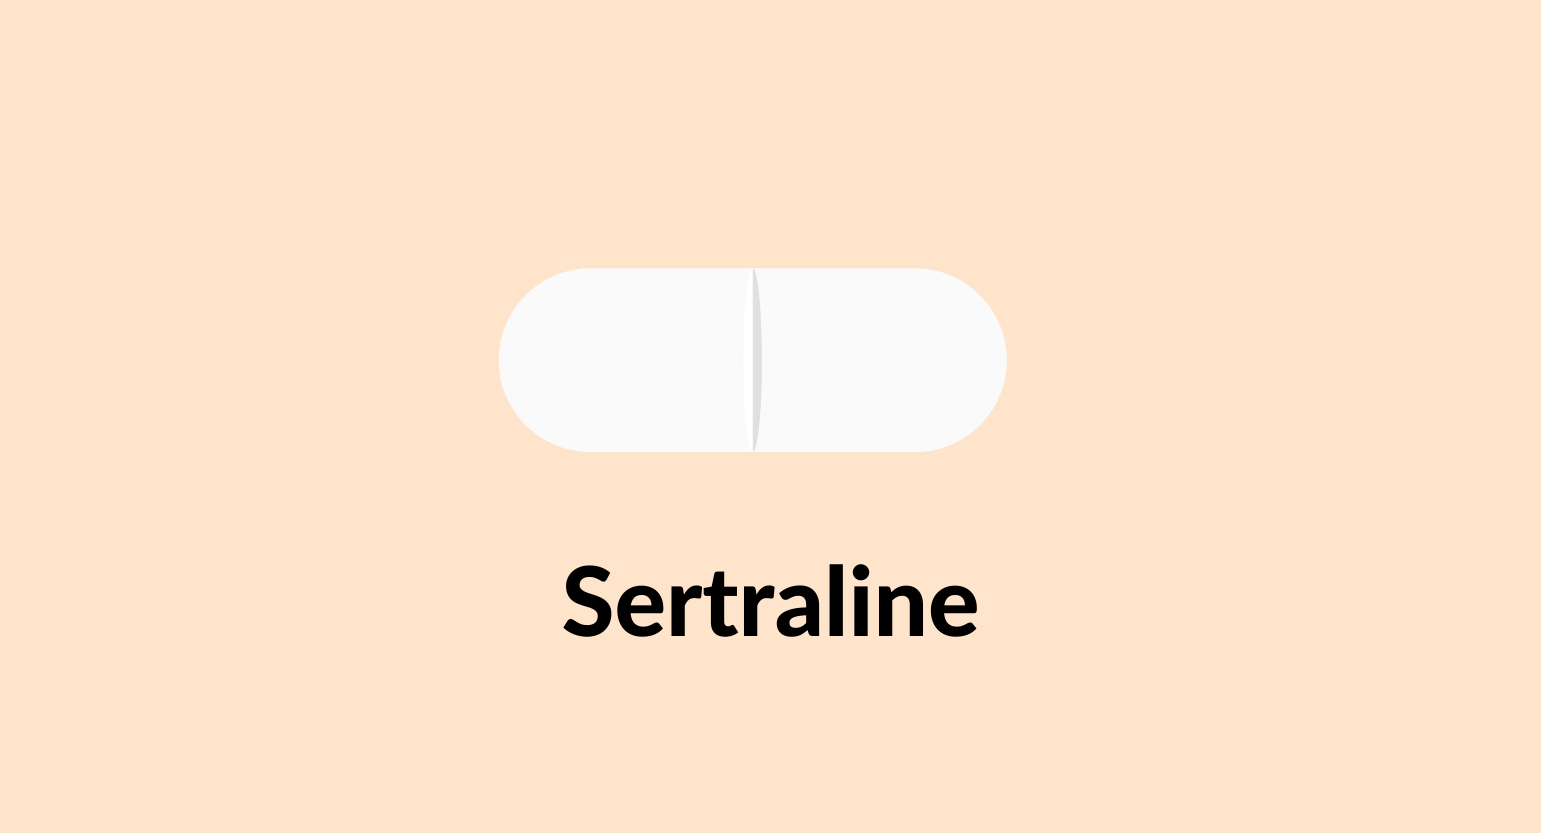 Illustration of a sertraline capsule.